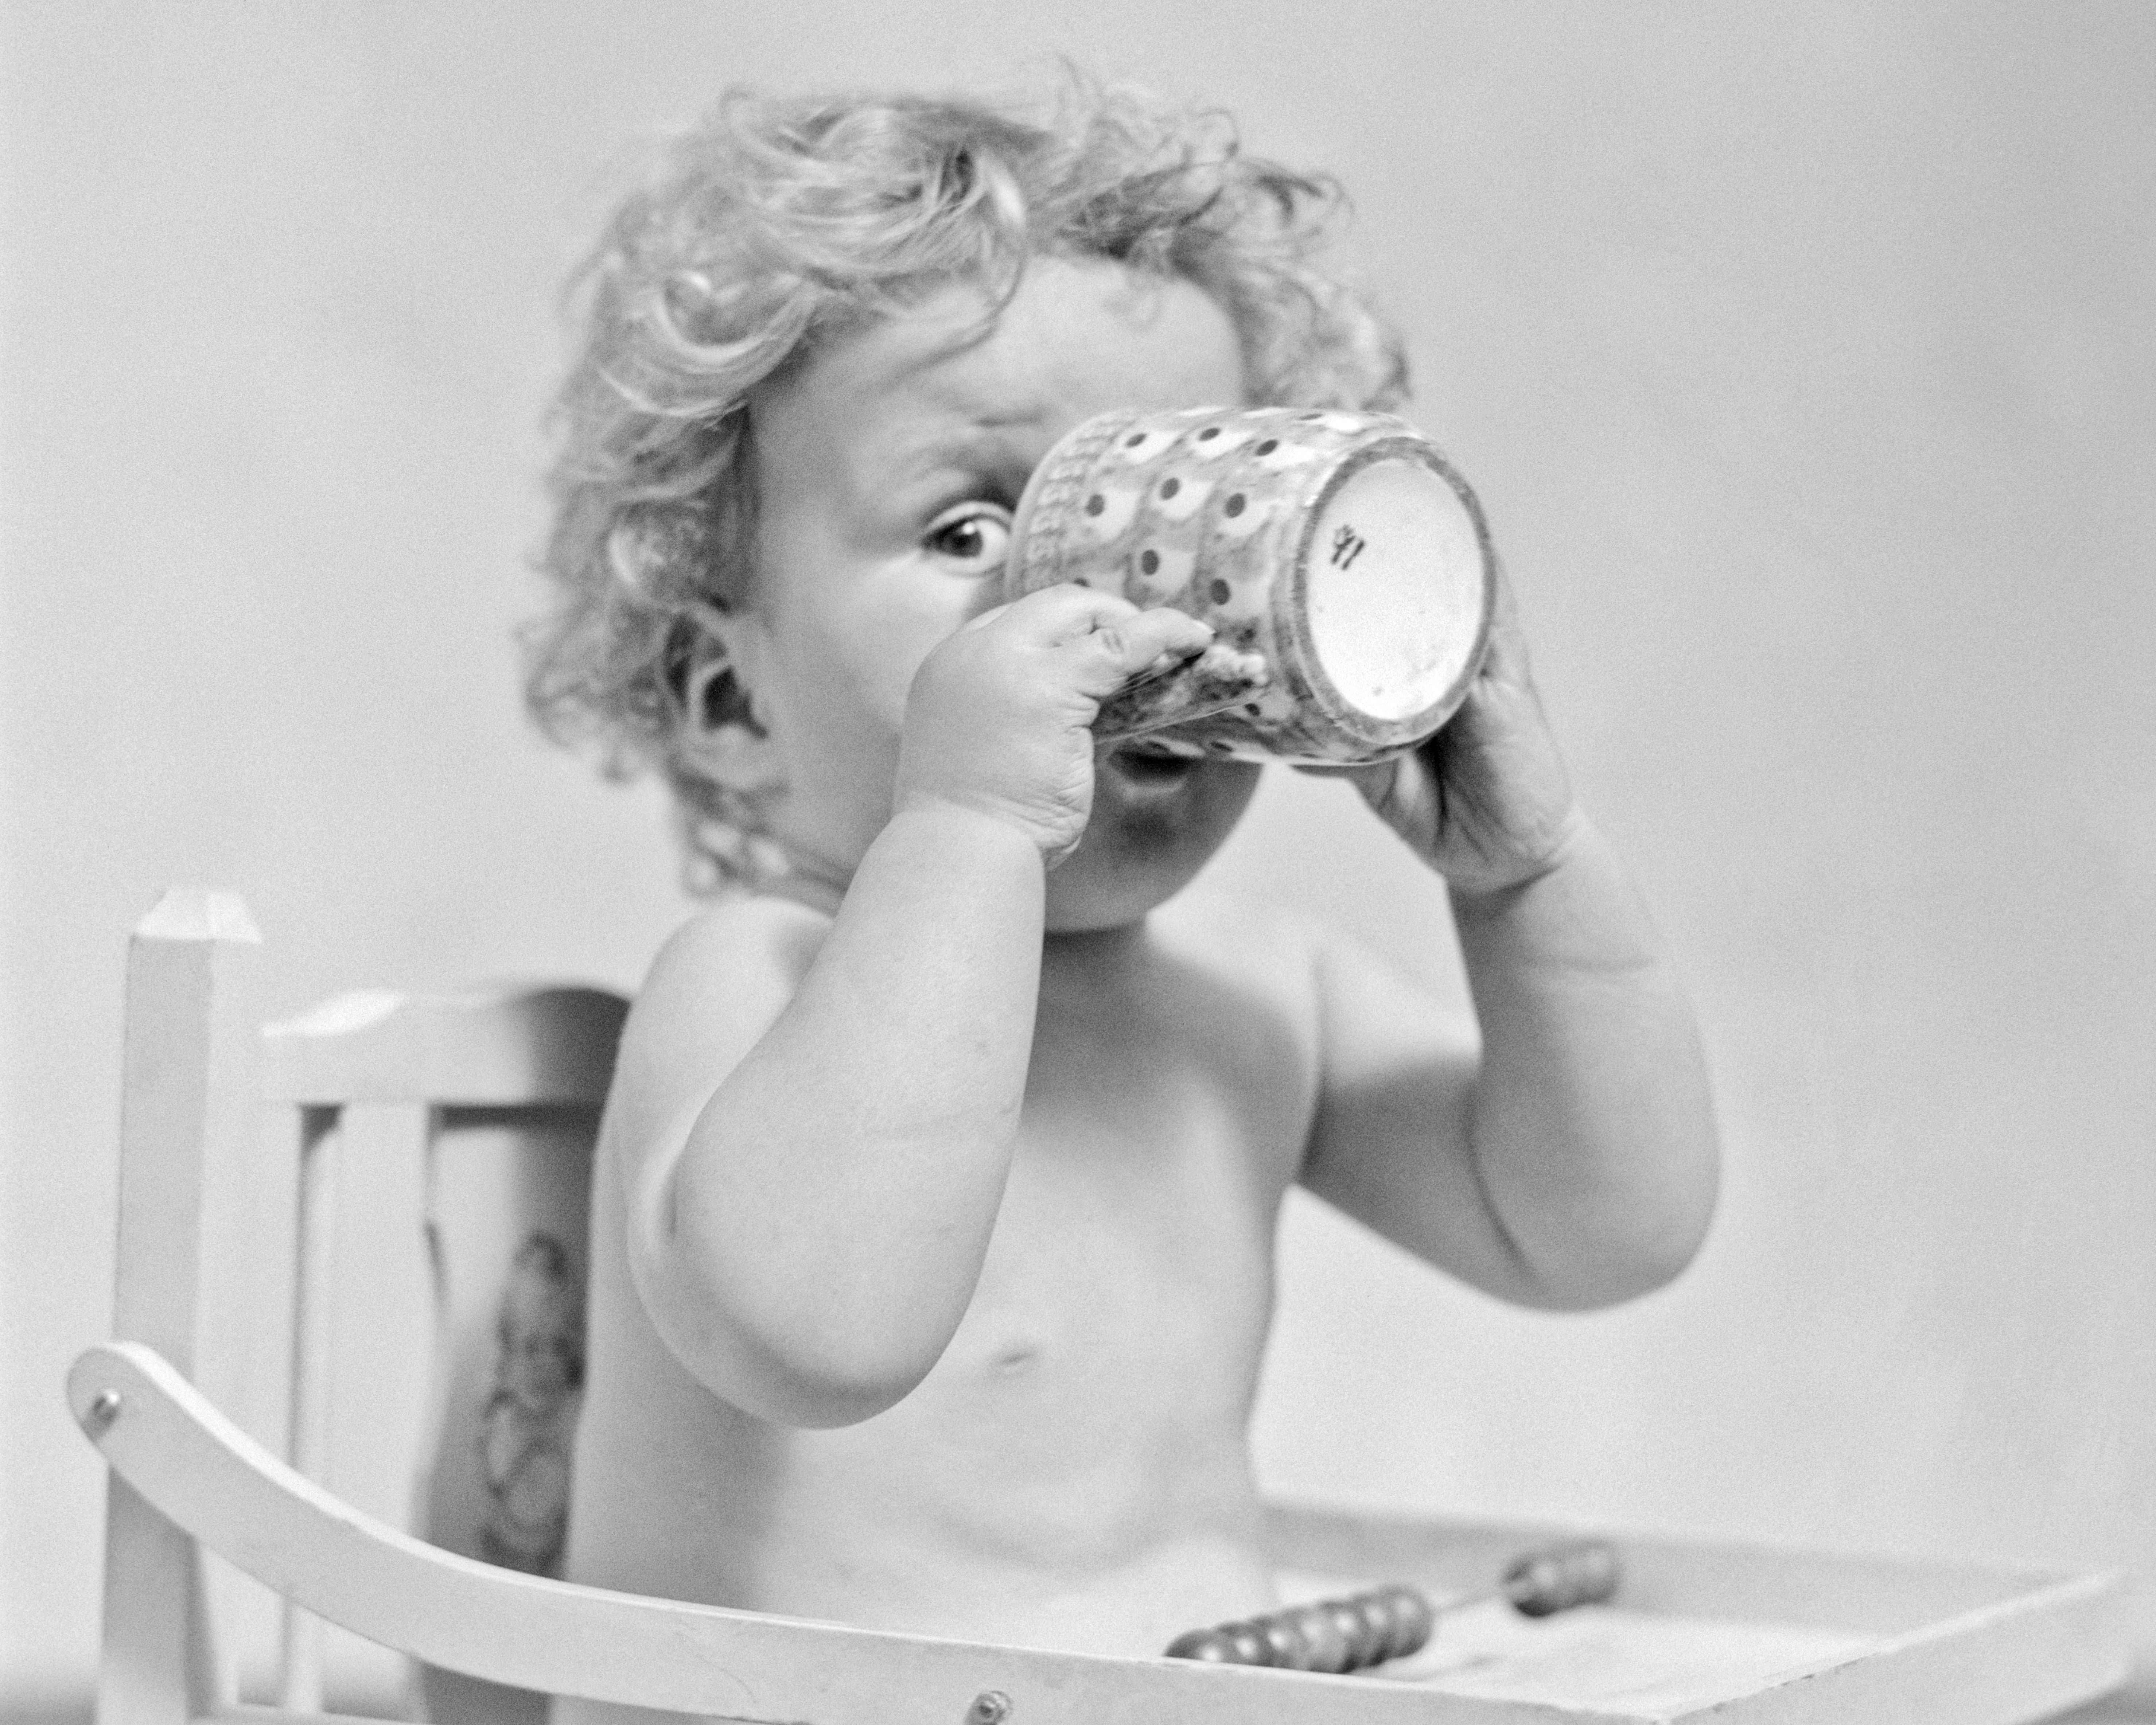 A baby boy sips from a mug